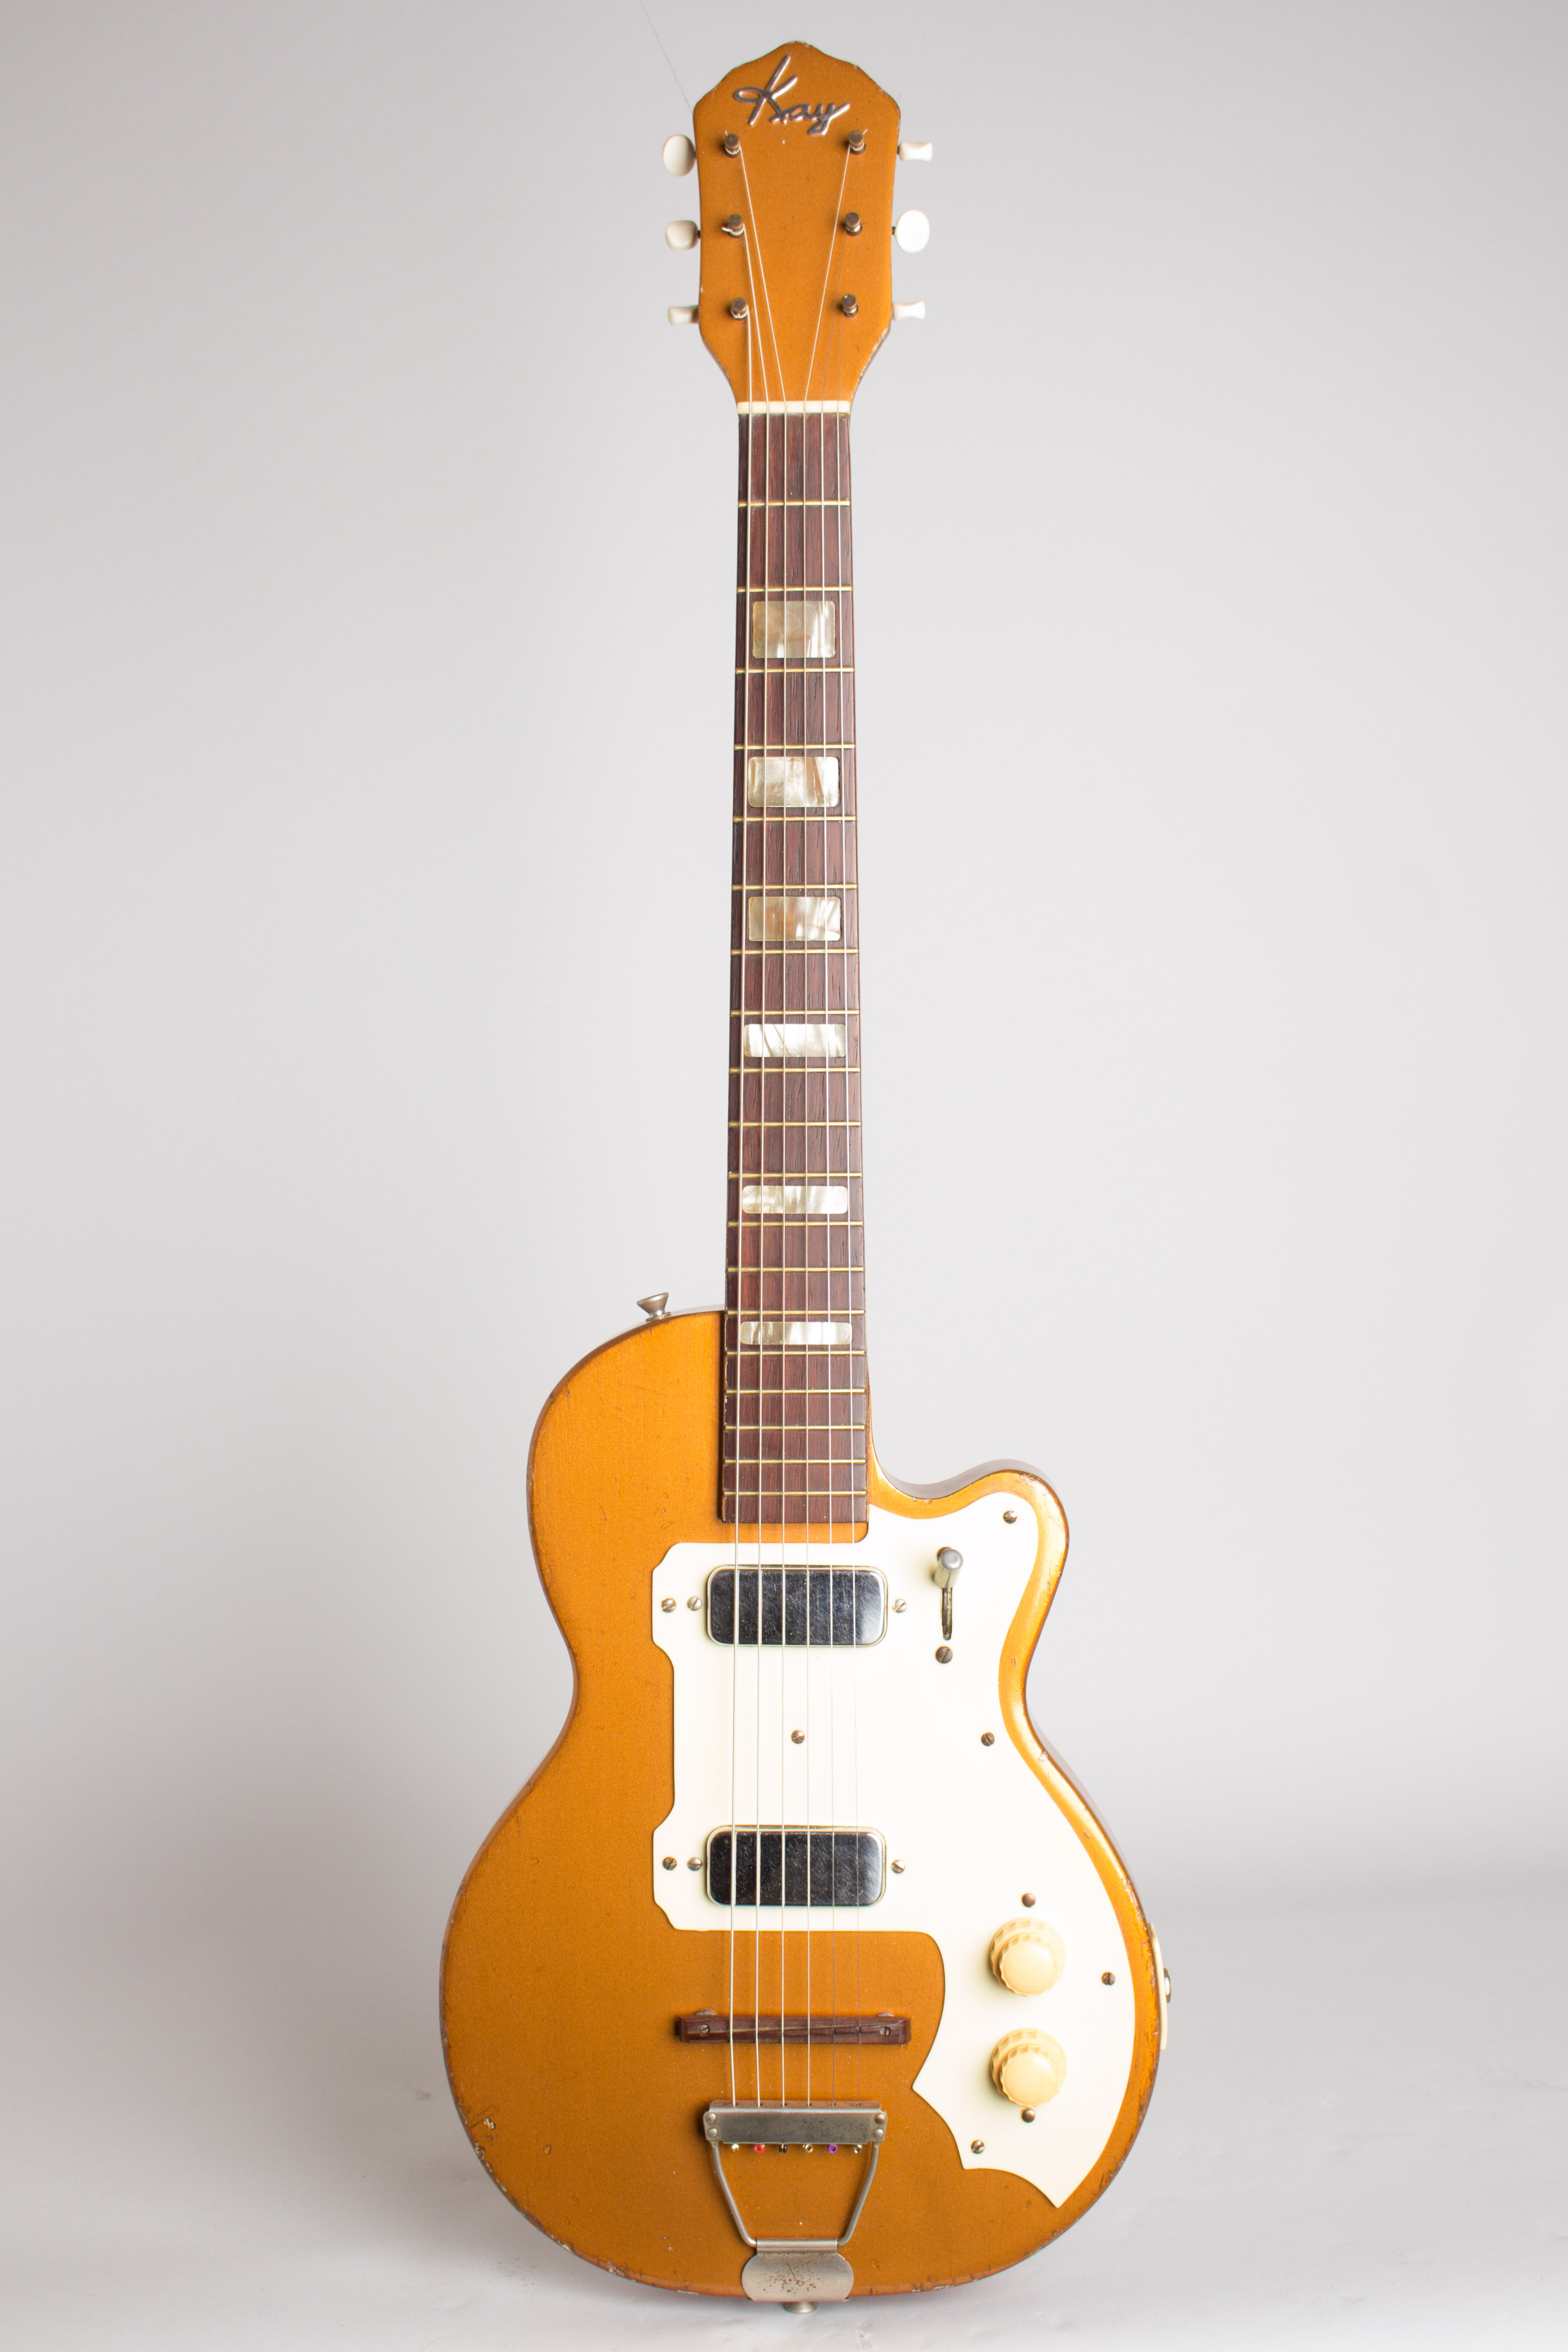 gracht elke dag stoomboot Kay K-142 Solid Body Electric Guitar , c. 1956 | RetroFret